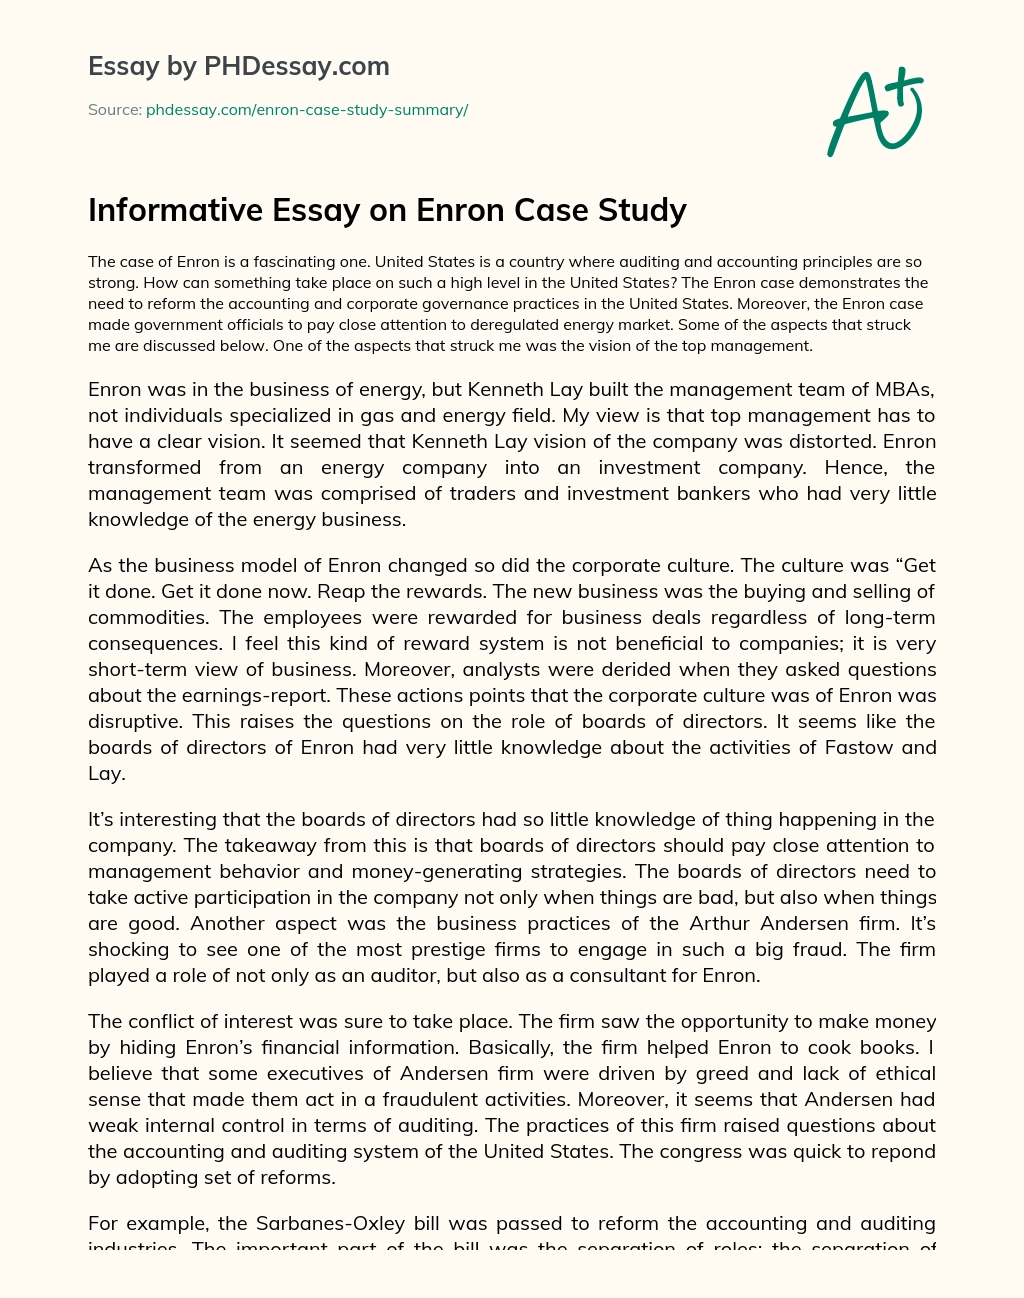 Informative Essay on Enron Case Study essay